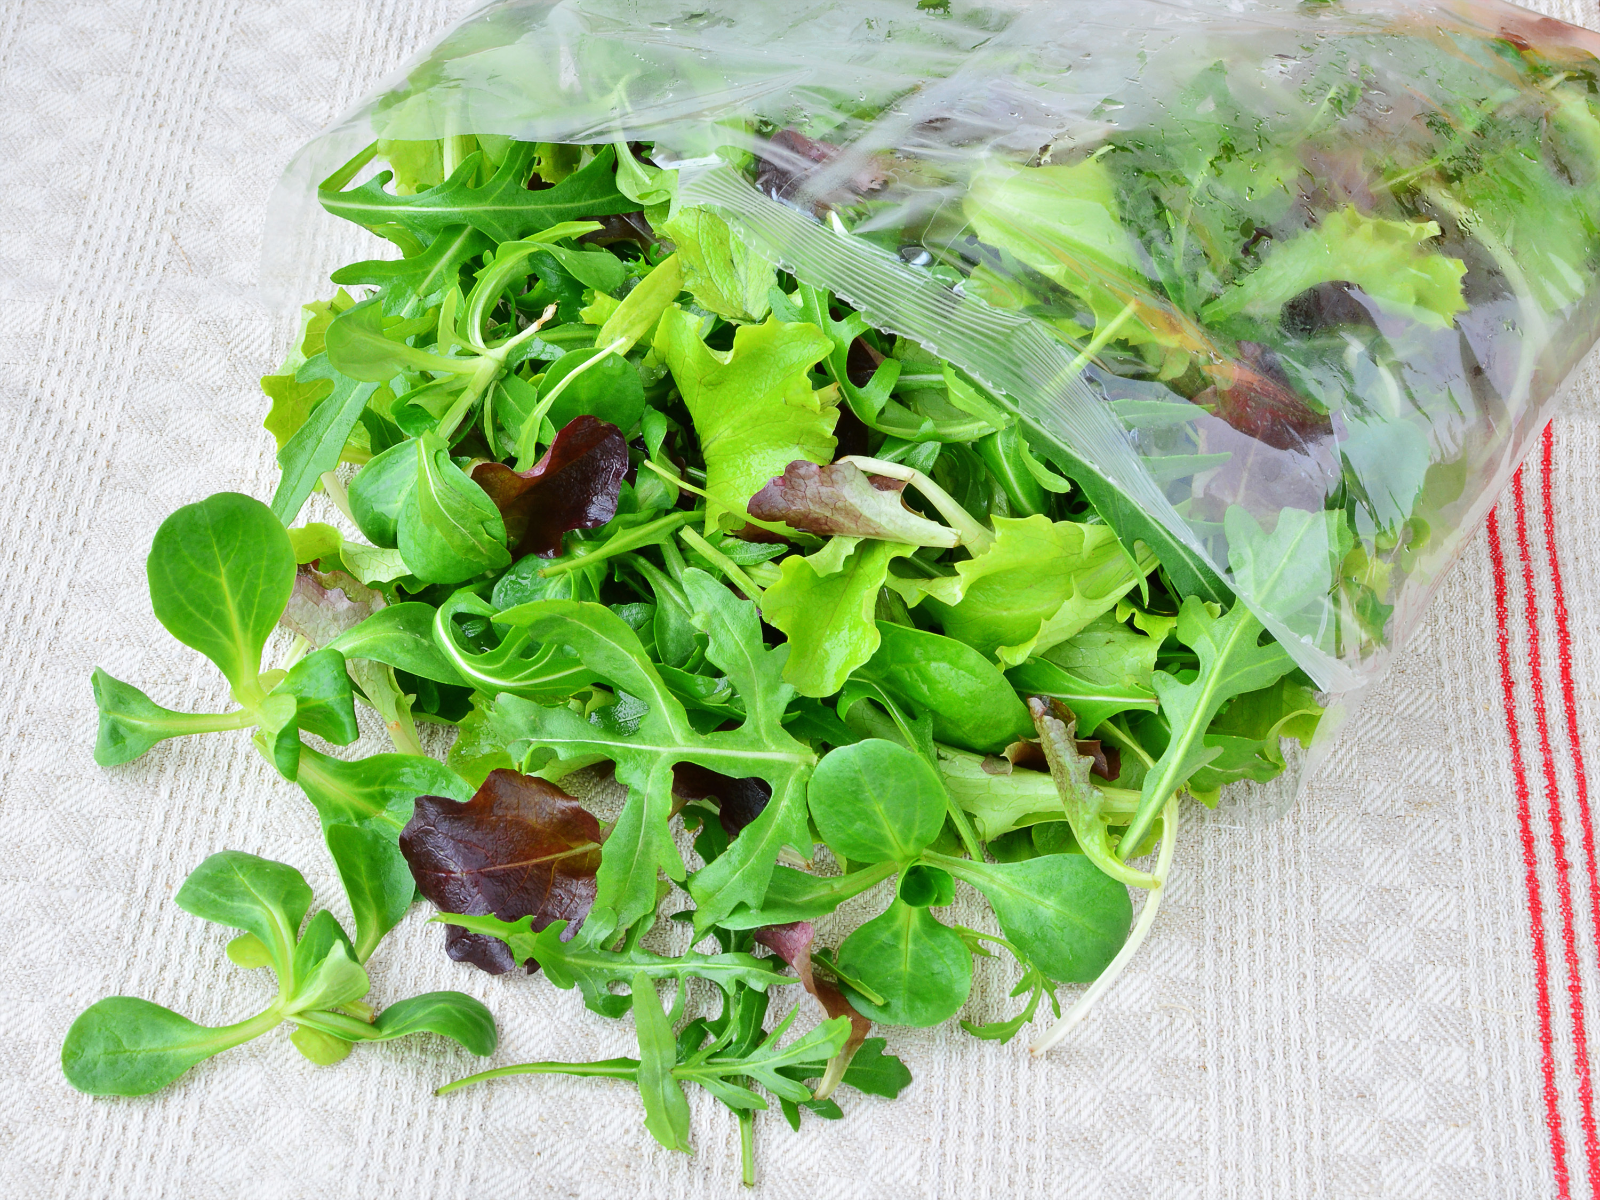 opened bag of salad greens